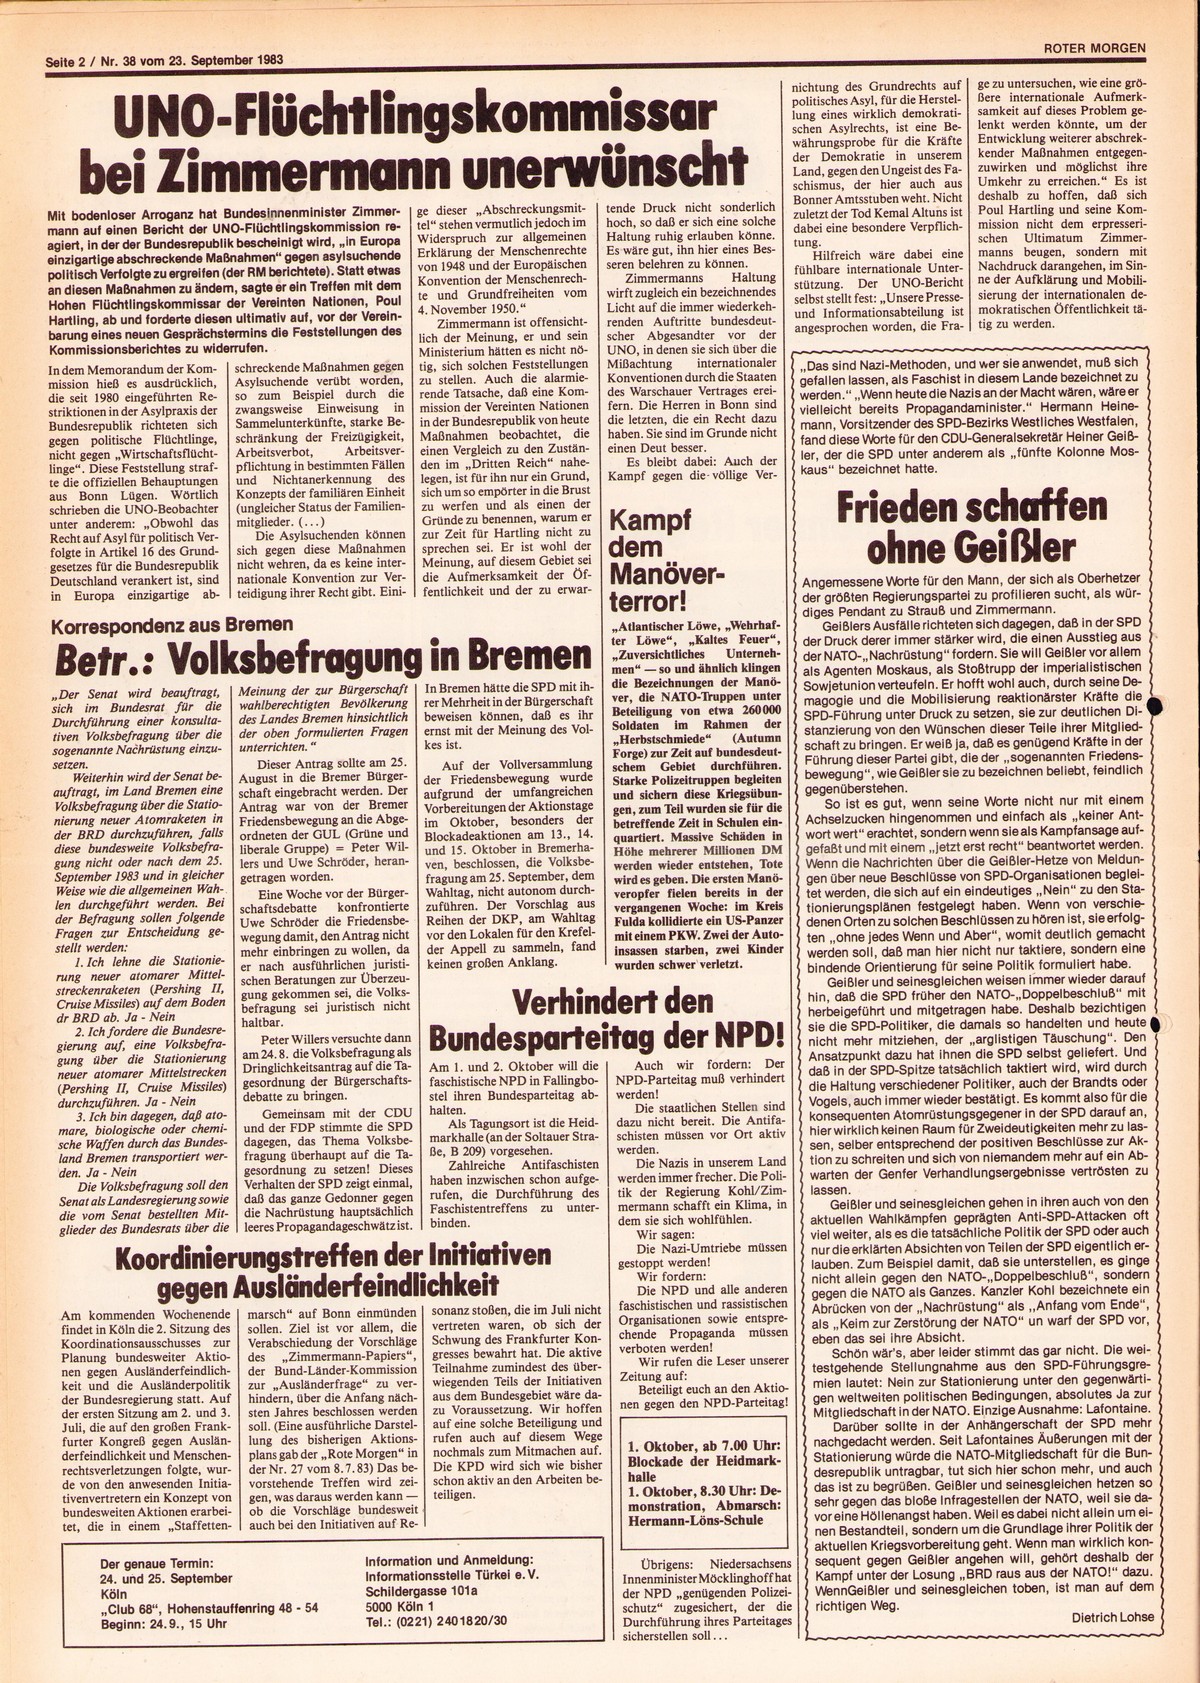 Roter Morgen, 17. Jg., 23. September 1983, Nr. 38, Seite 2